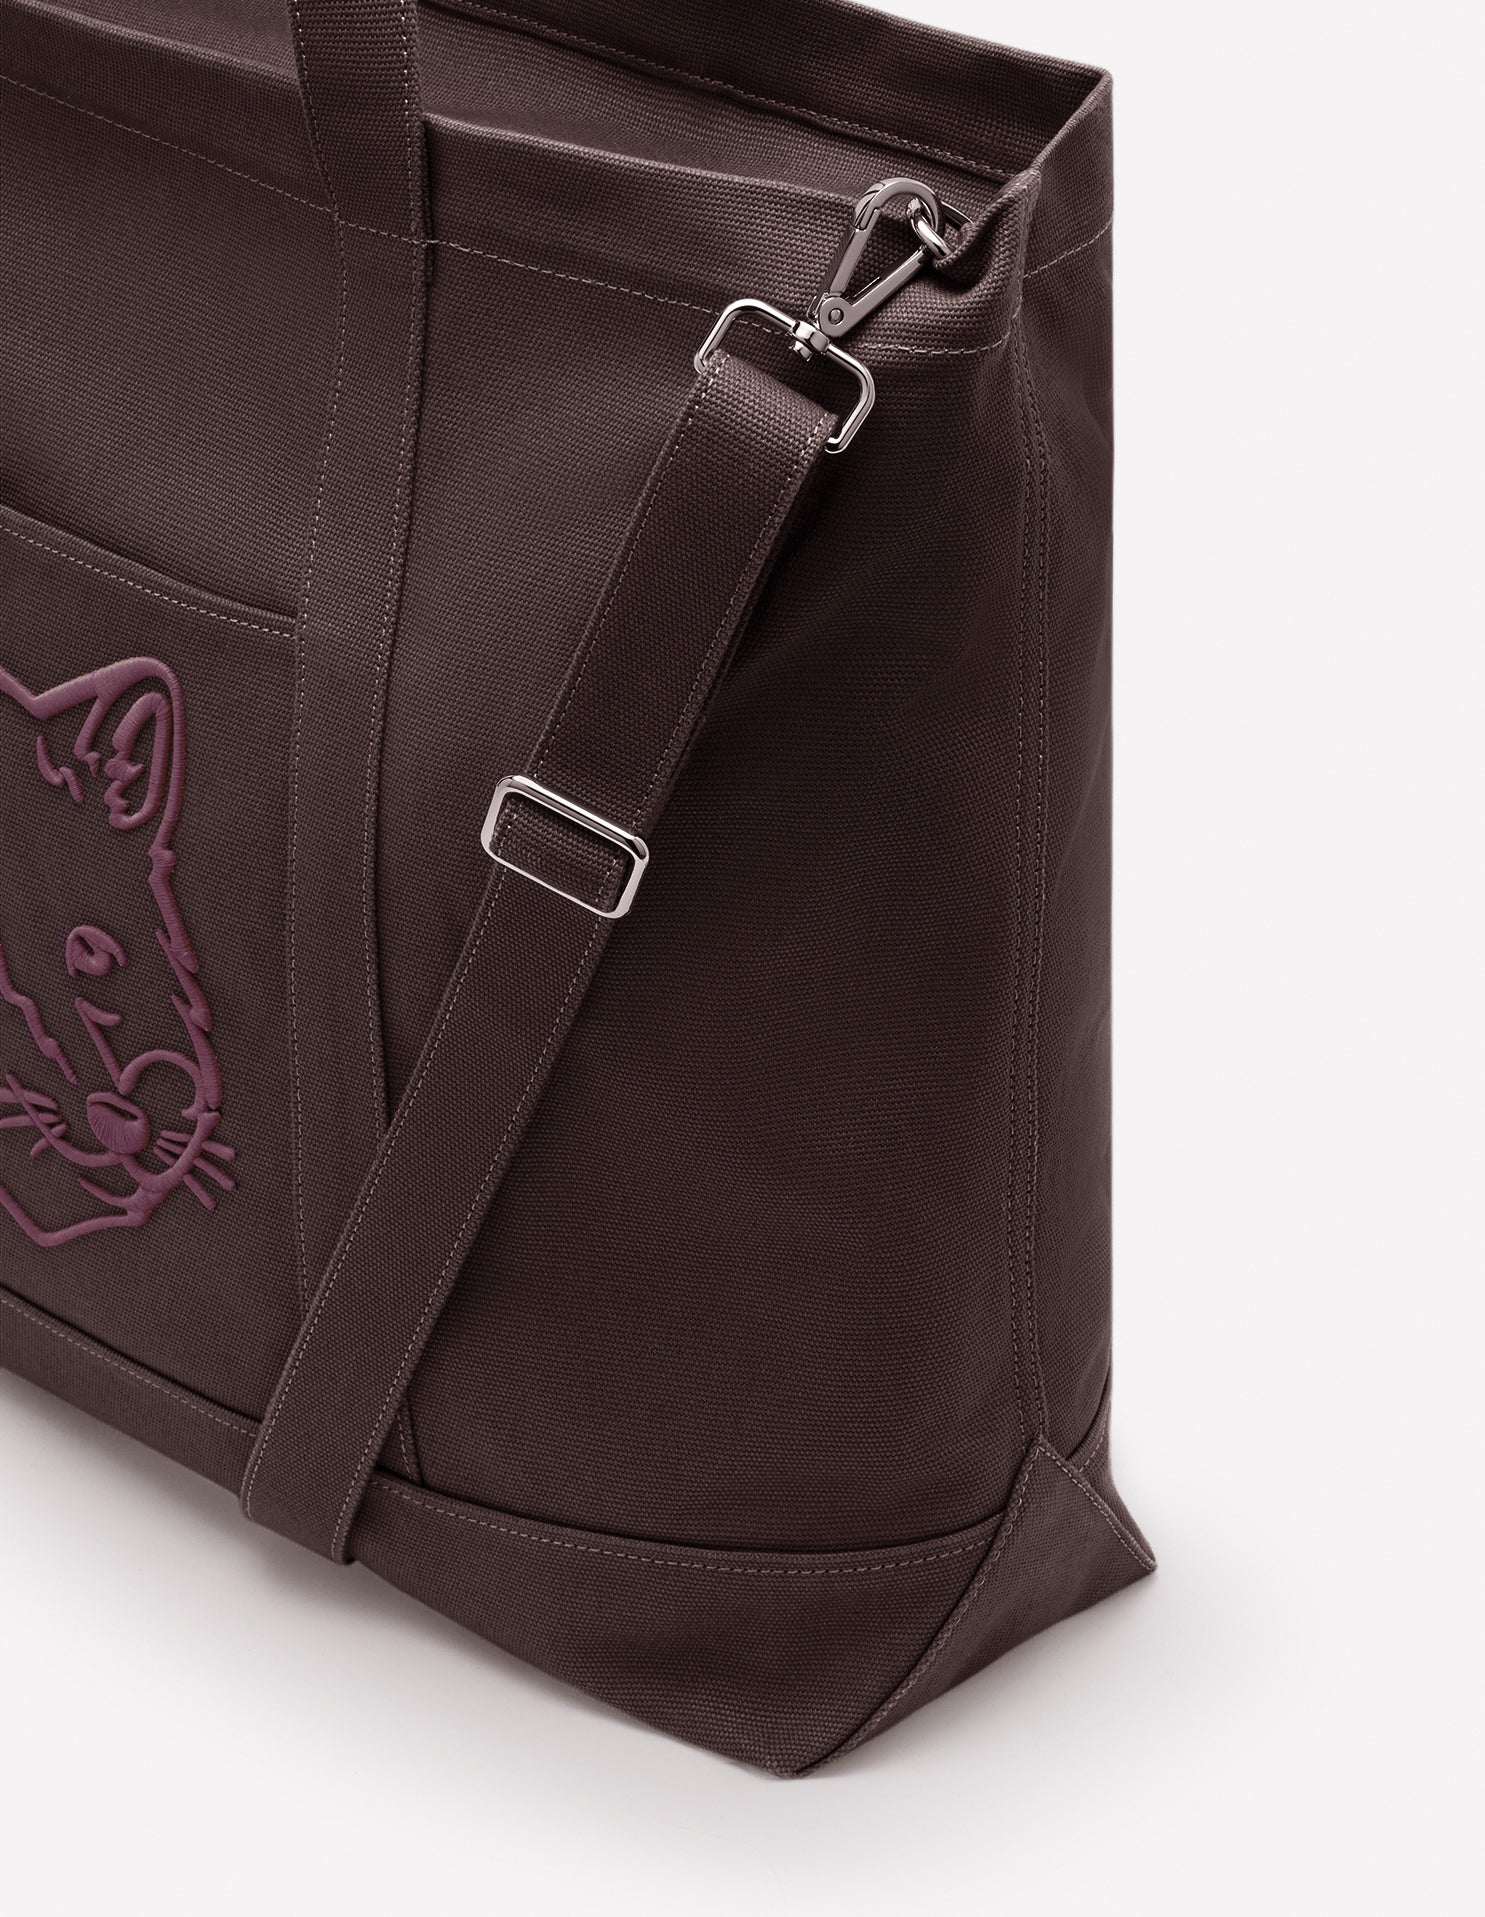 Maison Kitsune Bold Fox Head XL Tote Bag Pecan Brown LW05105WW0083 P299